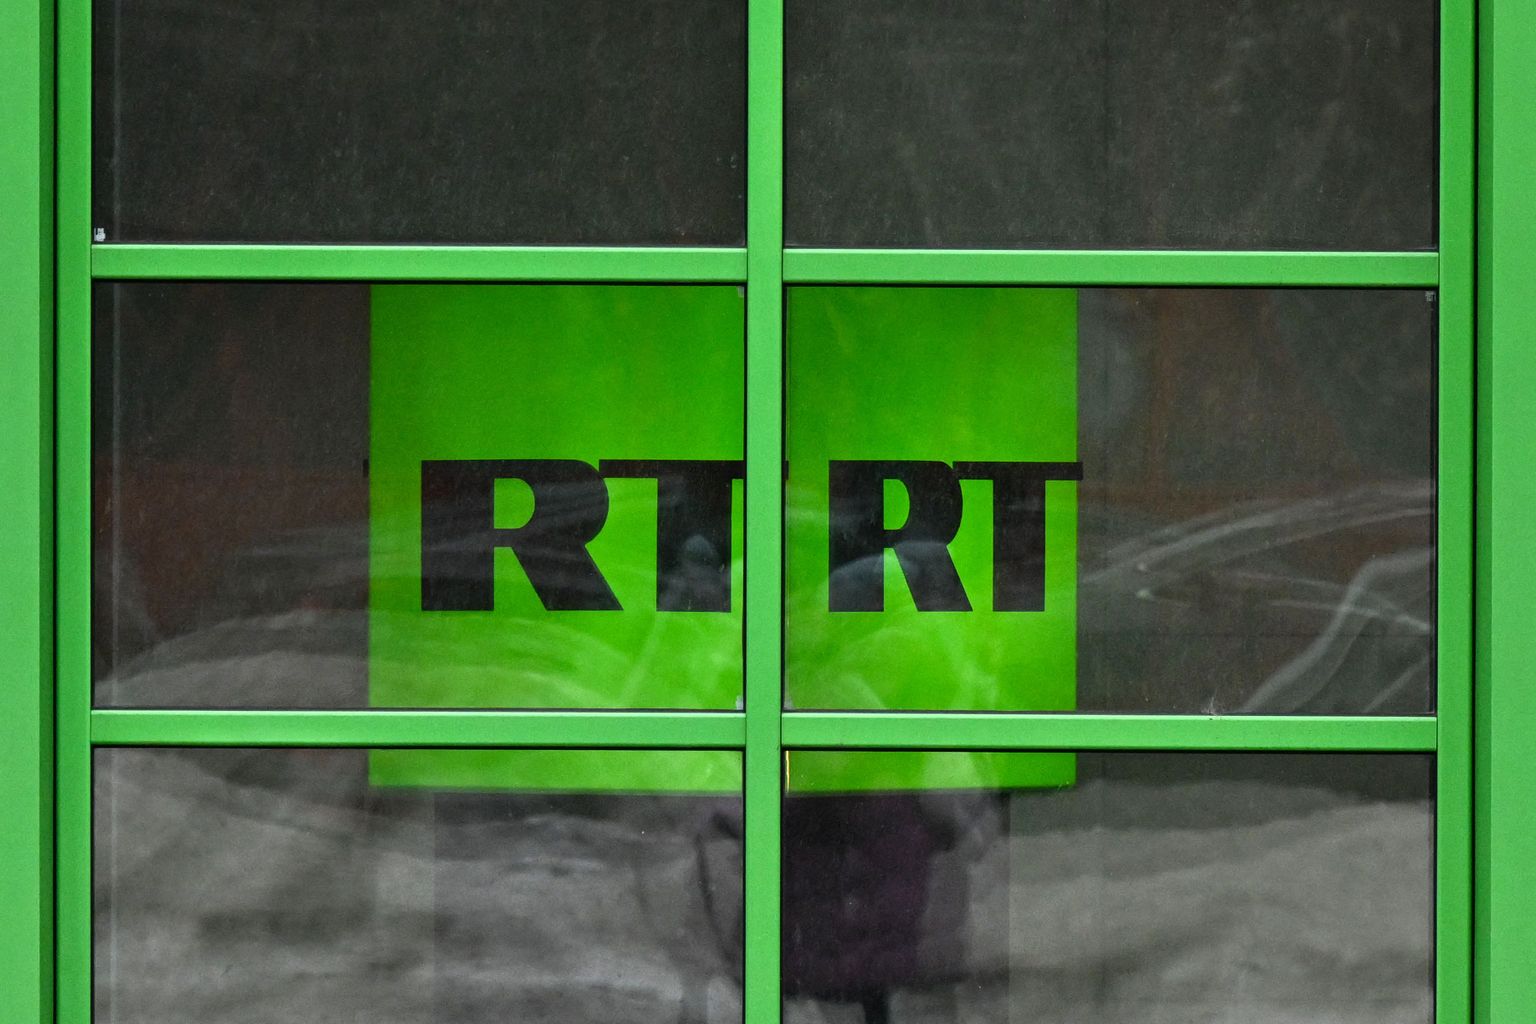 Vene propagandakanali RT logo.